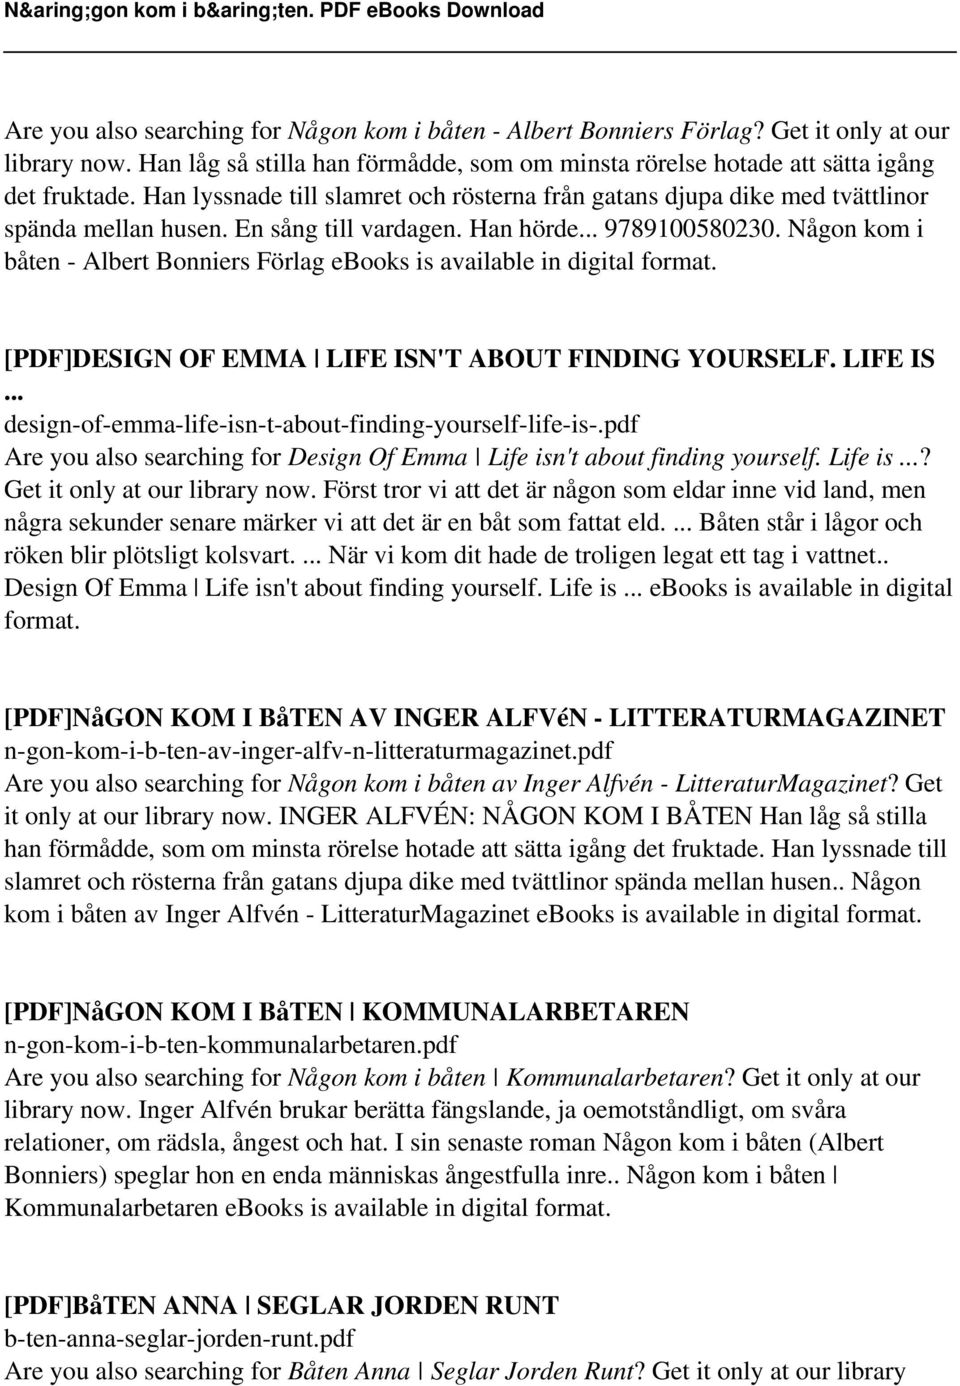 Någon kom i båten - Albert Bonniers Förlag ebooks is available in digital [PDF]DESIGN OF EMMA LIFE ISN'T ABOUT FINDING YOURSELF. LIFE IS... design-of-emma-life-isn-t-about-finding-yourself-life-is-.